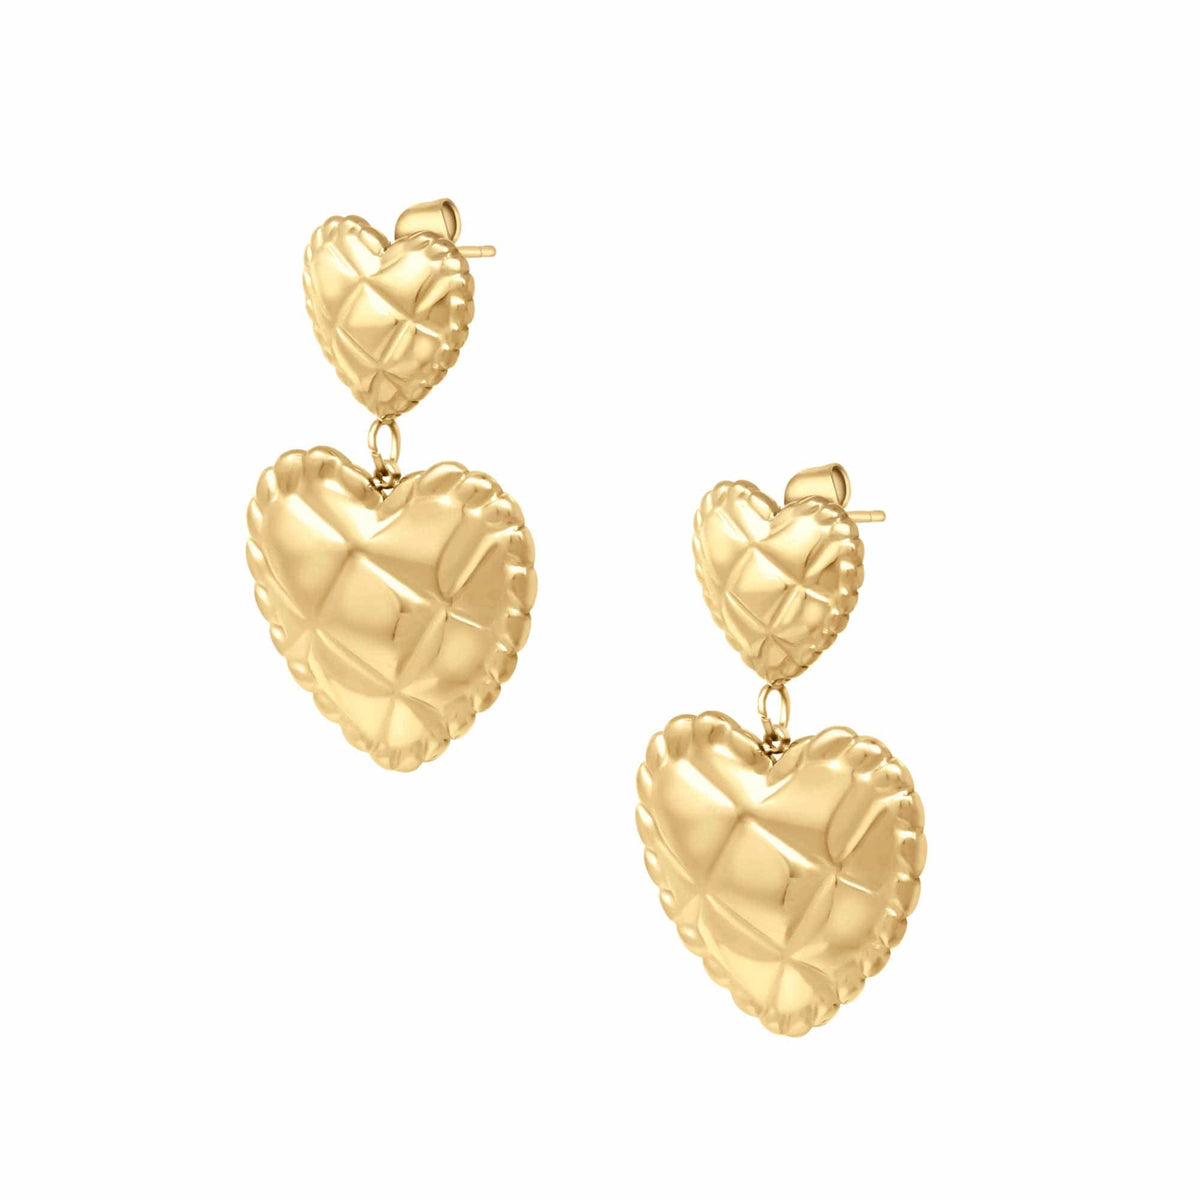 BohoMoon Stainless Steel Flirt Stud Earrings Gold